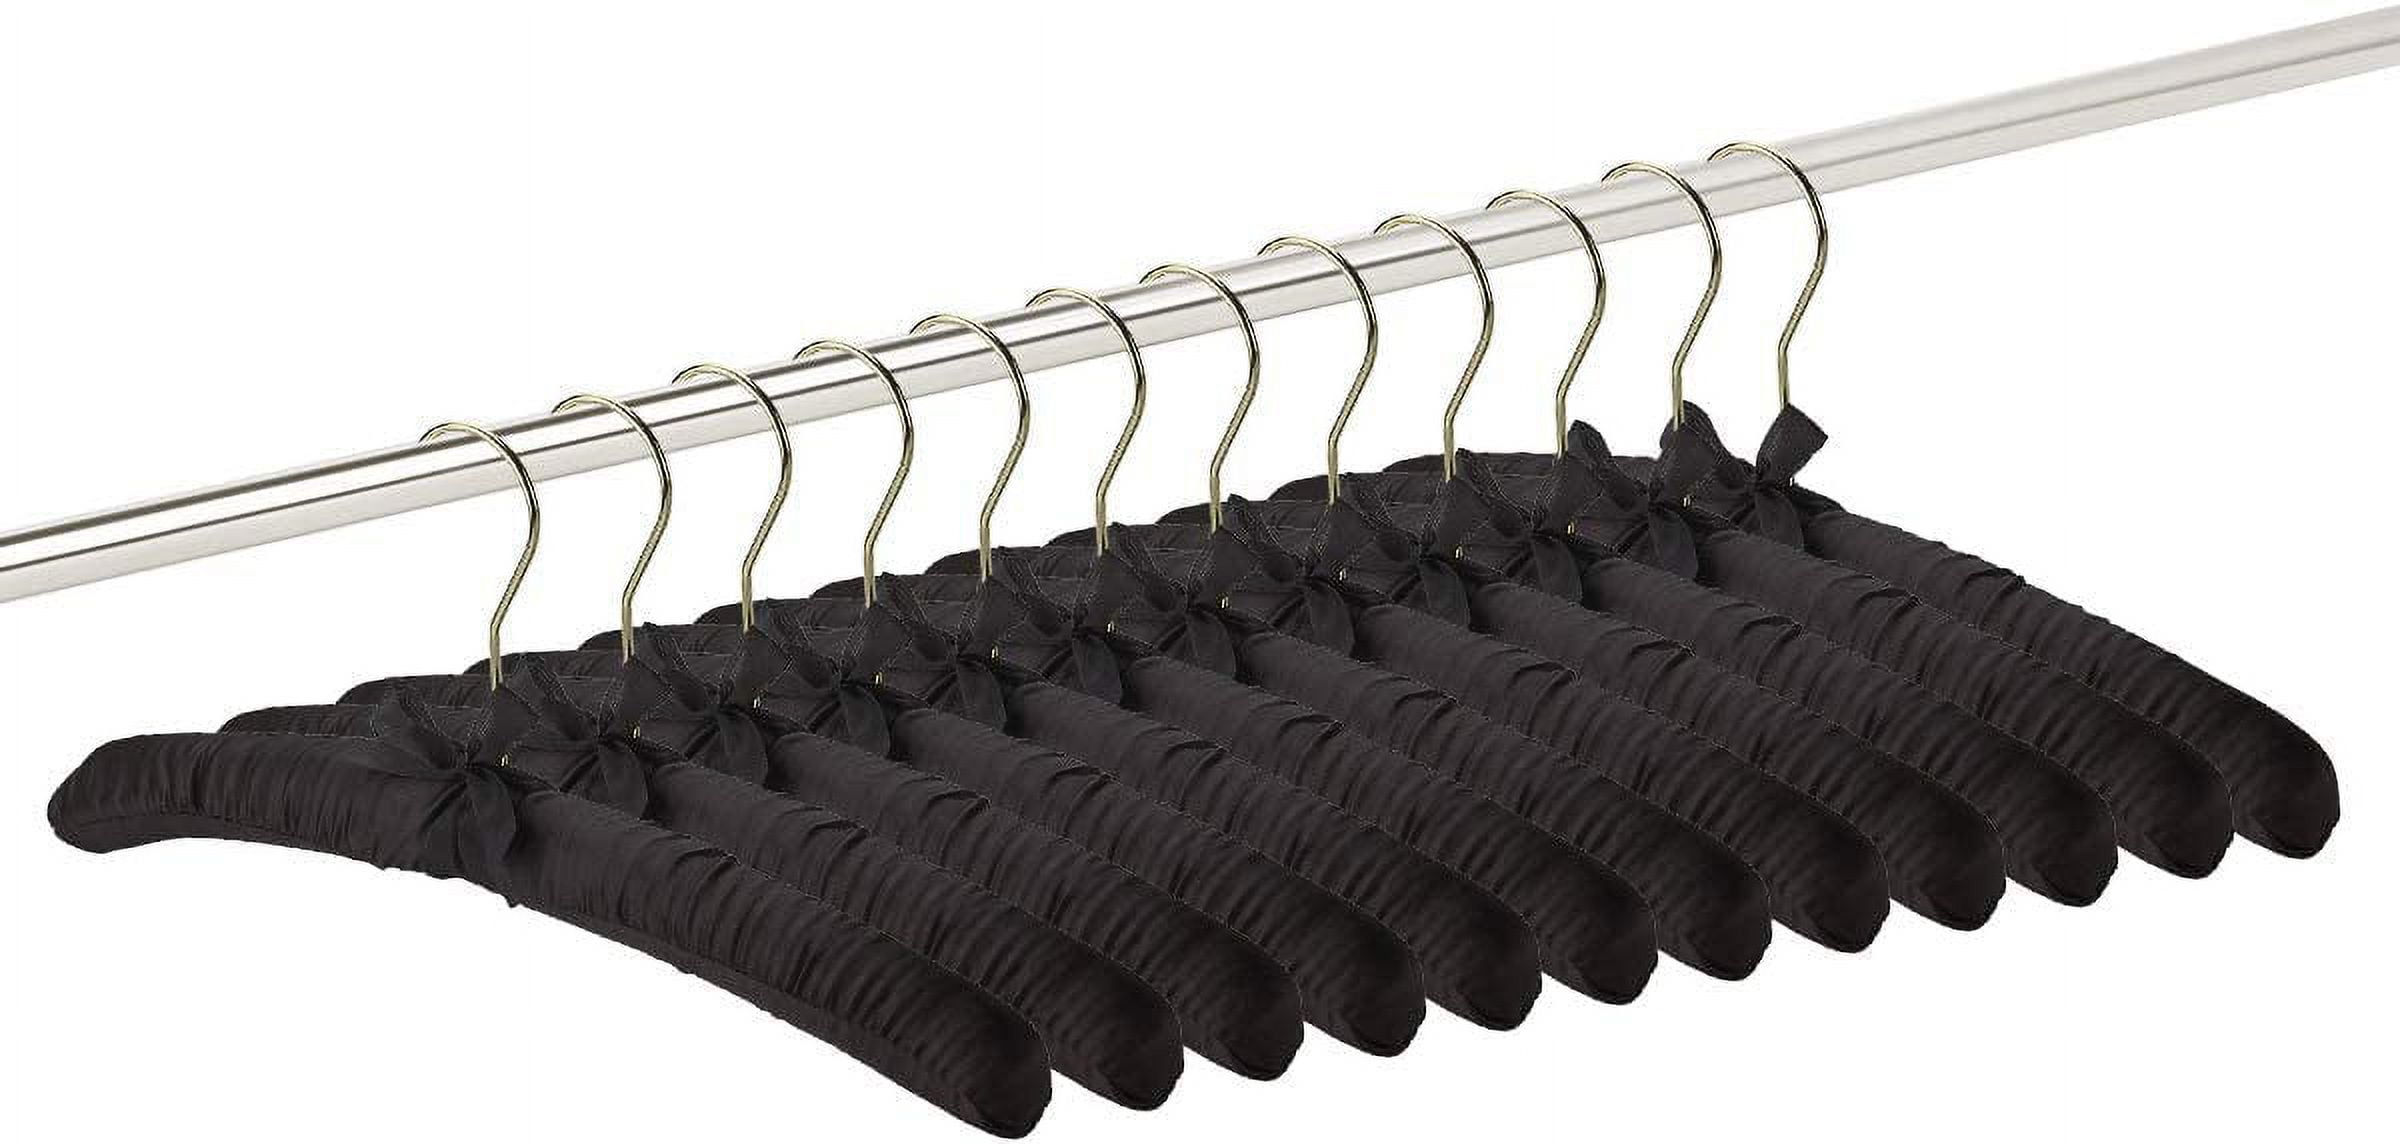 Florida Brands Padded Clothing Fabric Hangers for Women Clothing - Black,  Set of 12 Premium Coat Hangers for Closet, Bride Hanger for Wedding Dress